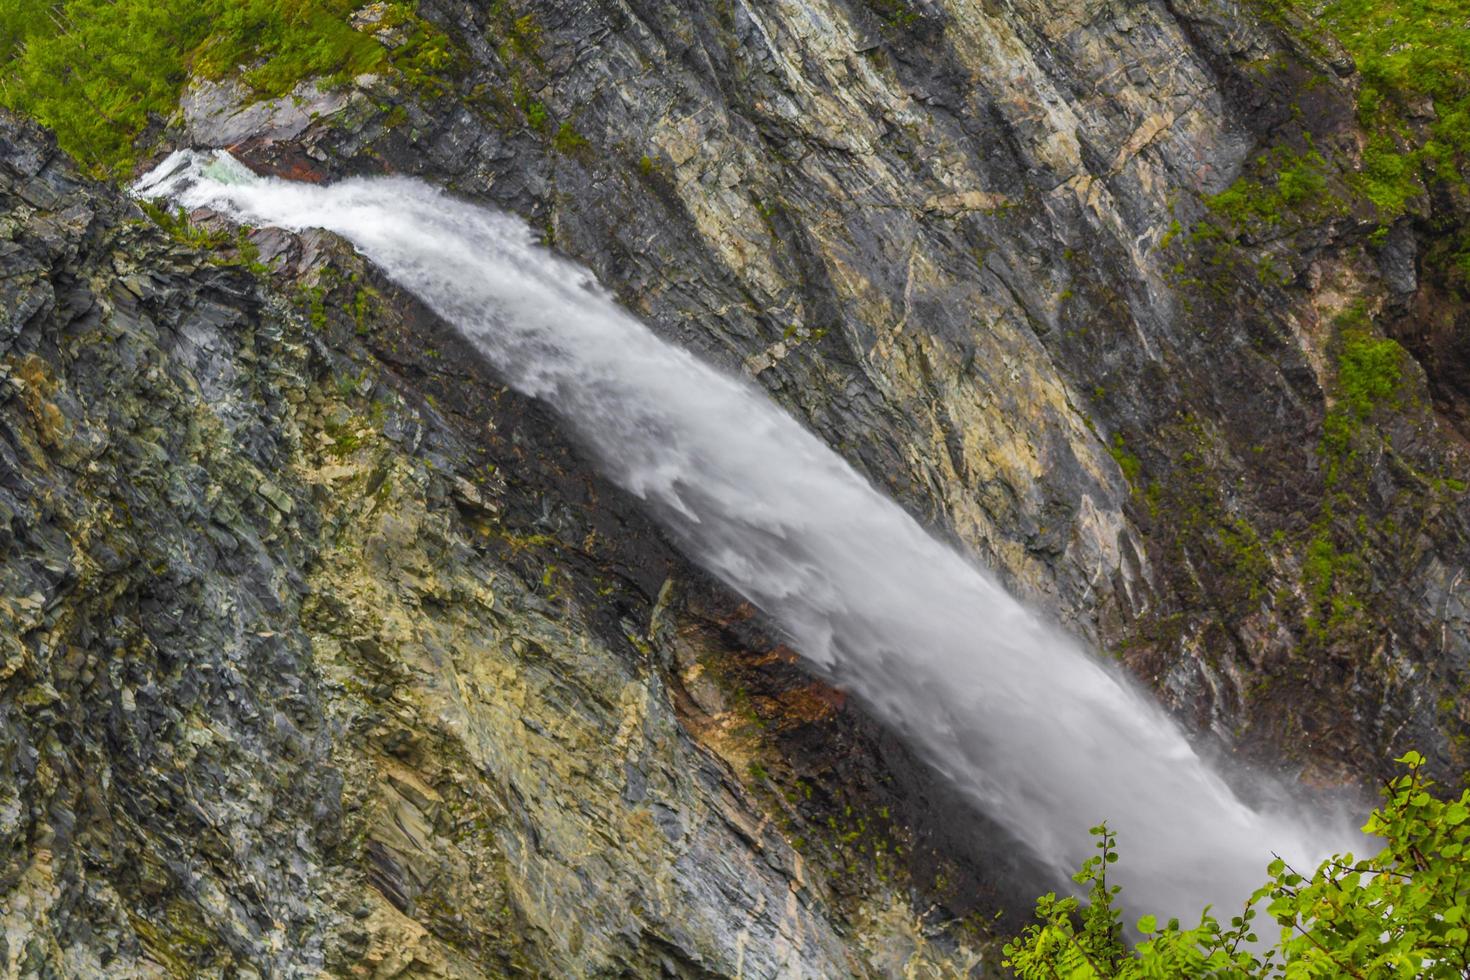 incredibile cascata più alta vettisfossen utladalen norvegia più bei paesaggi norvegesi. foto